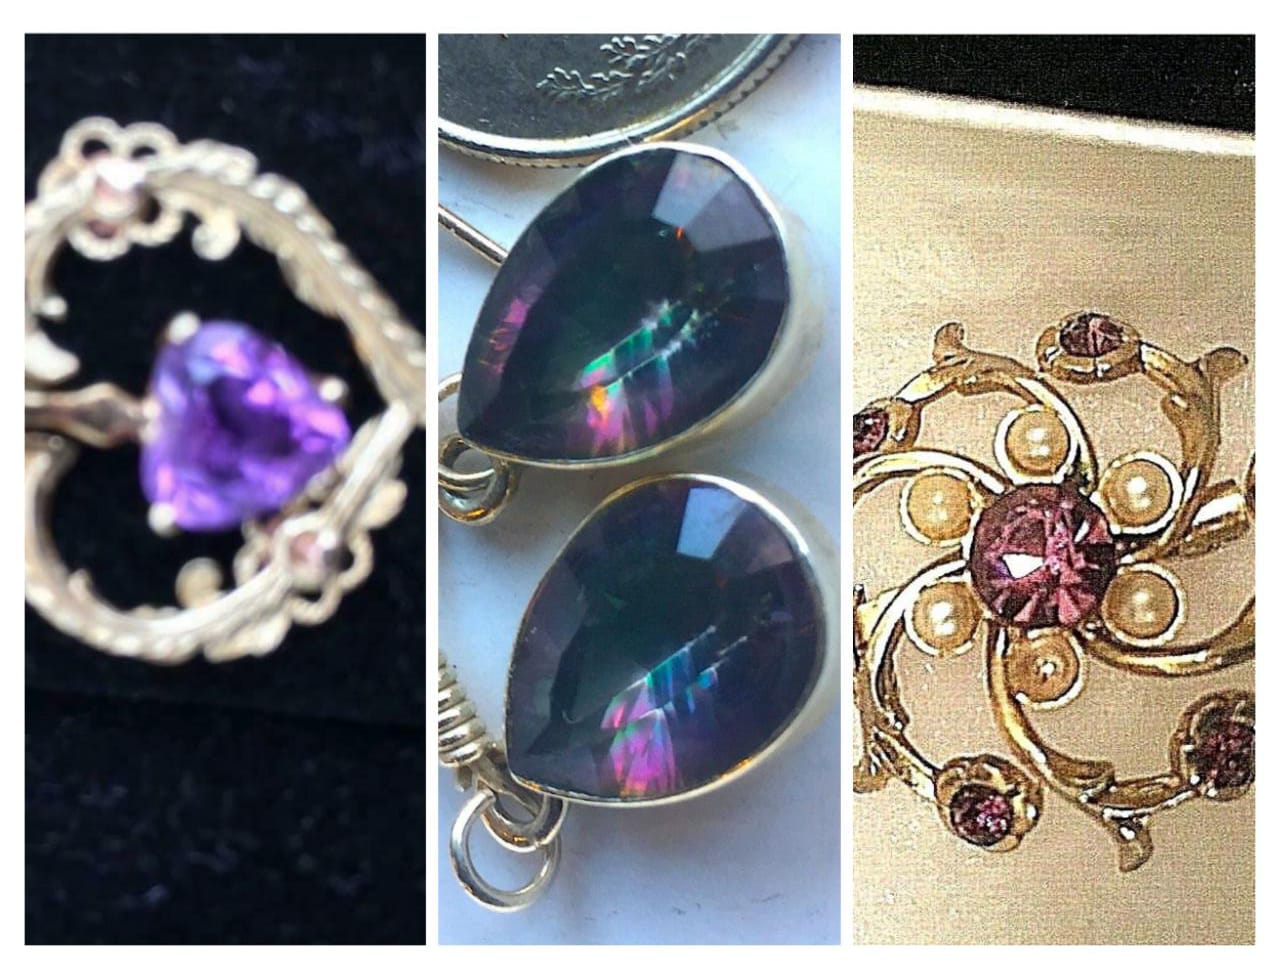 amethyst Earrings in sterling silver found at grandmas jewelry store on ebay